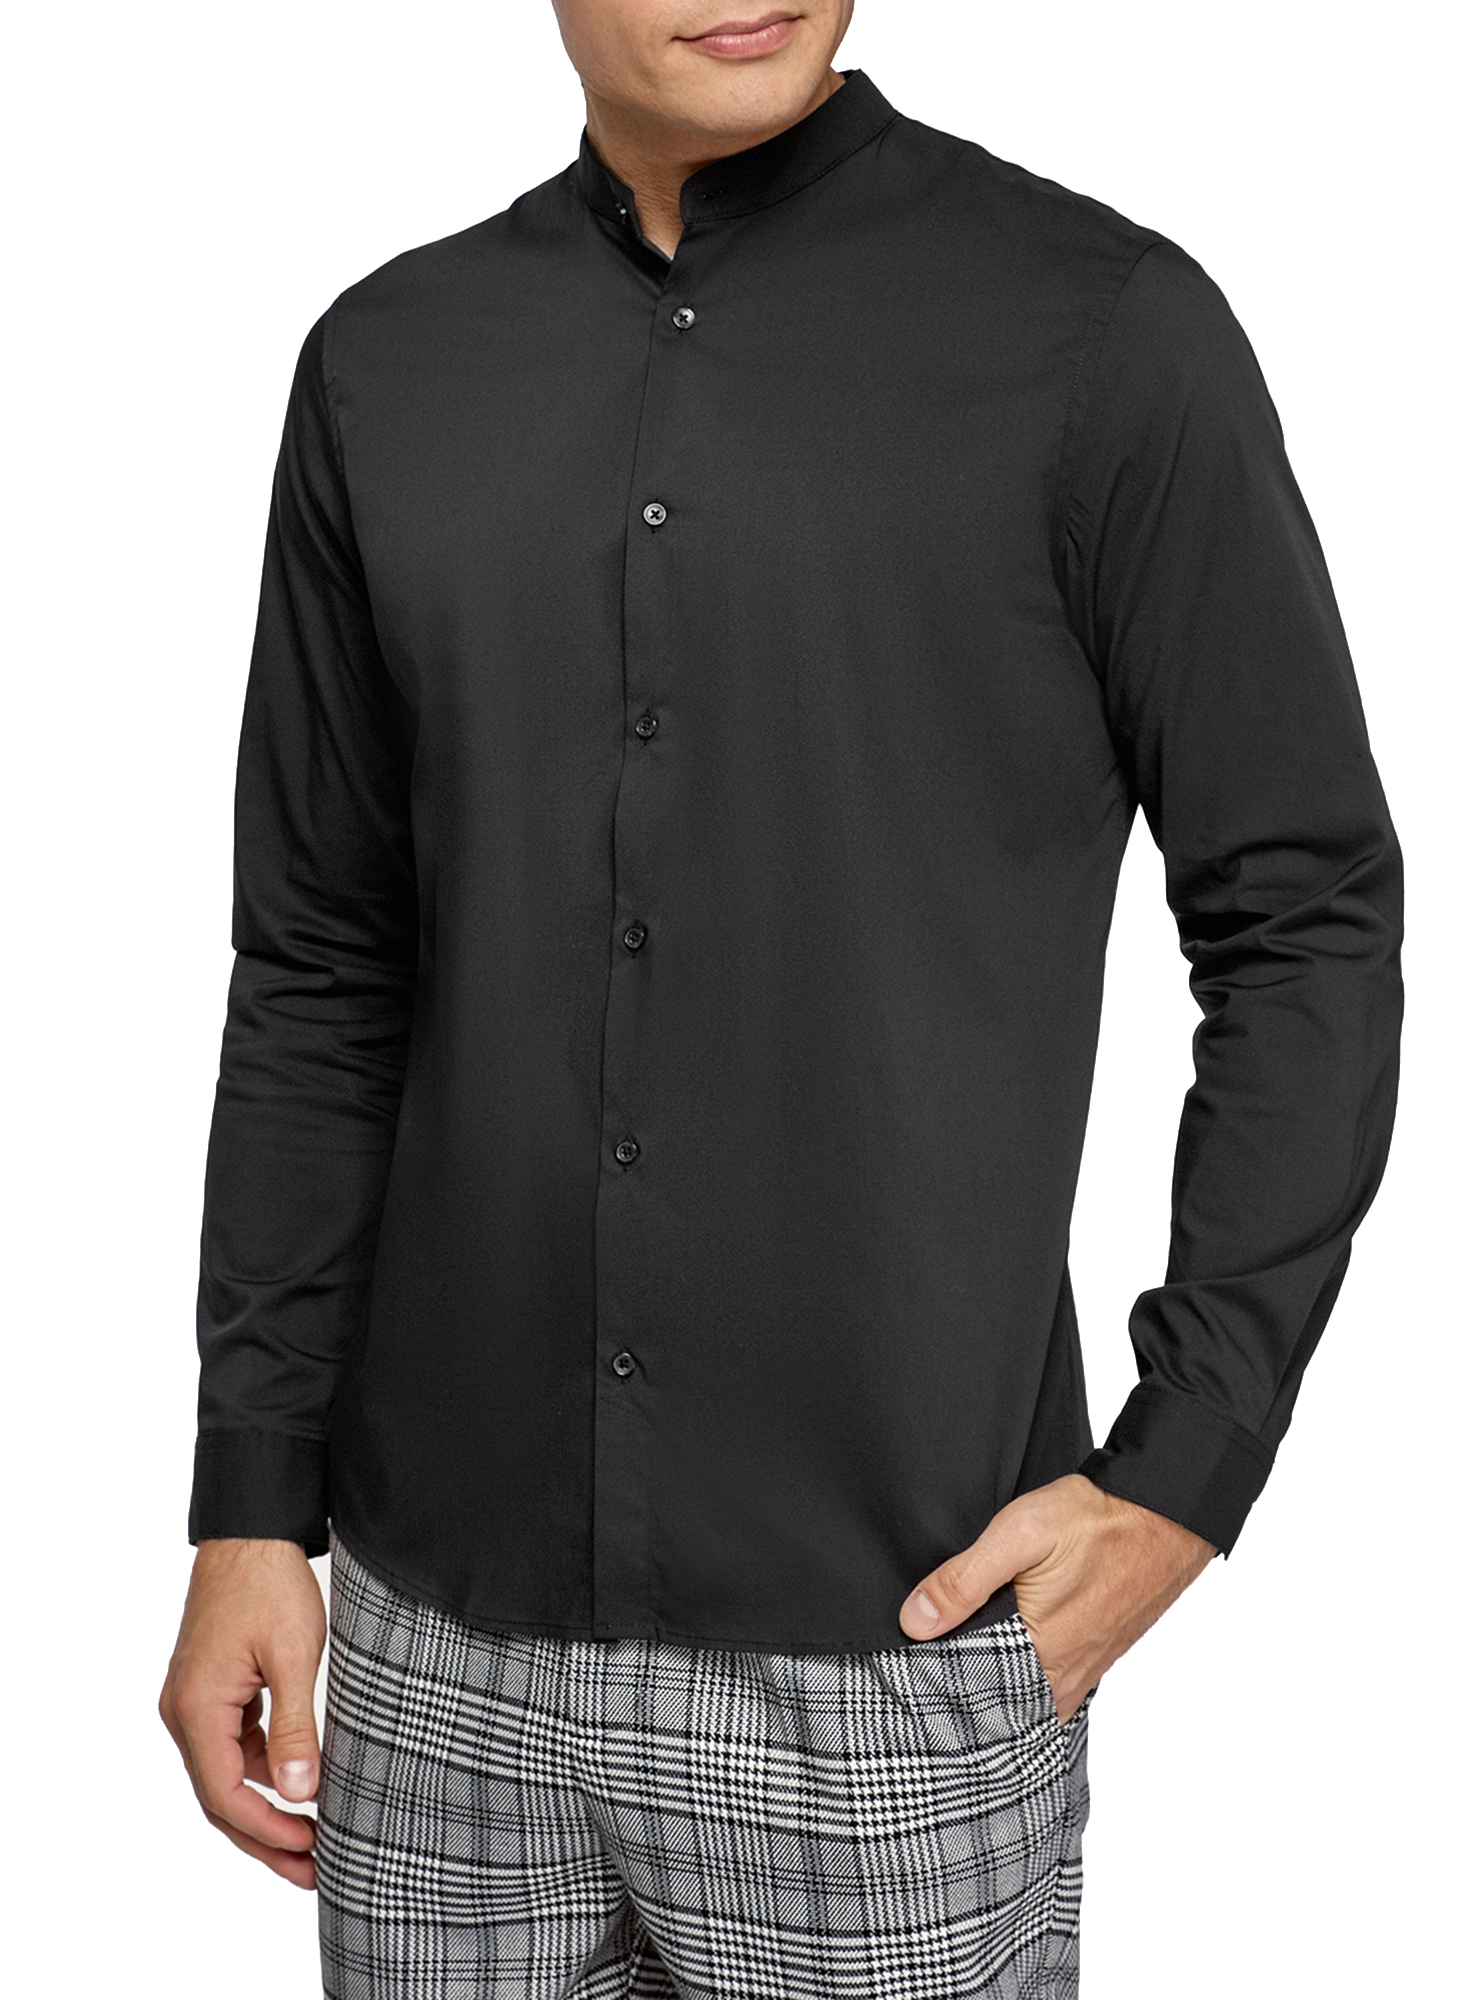 Рубашка мужская oodji 3B140004M черная L - купить в oodji, цена на Мегамаркет